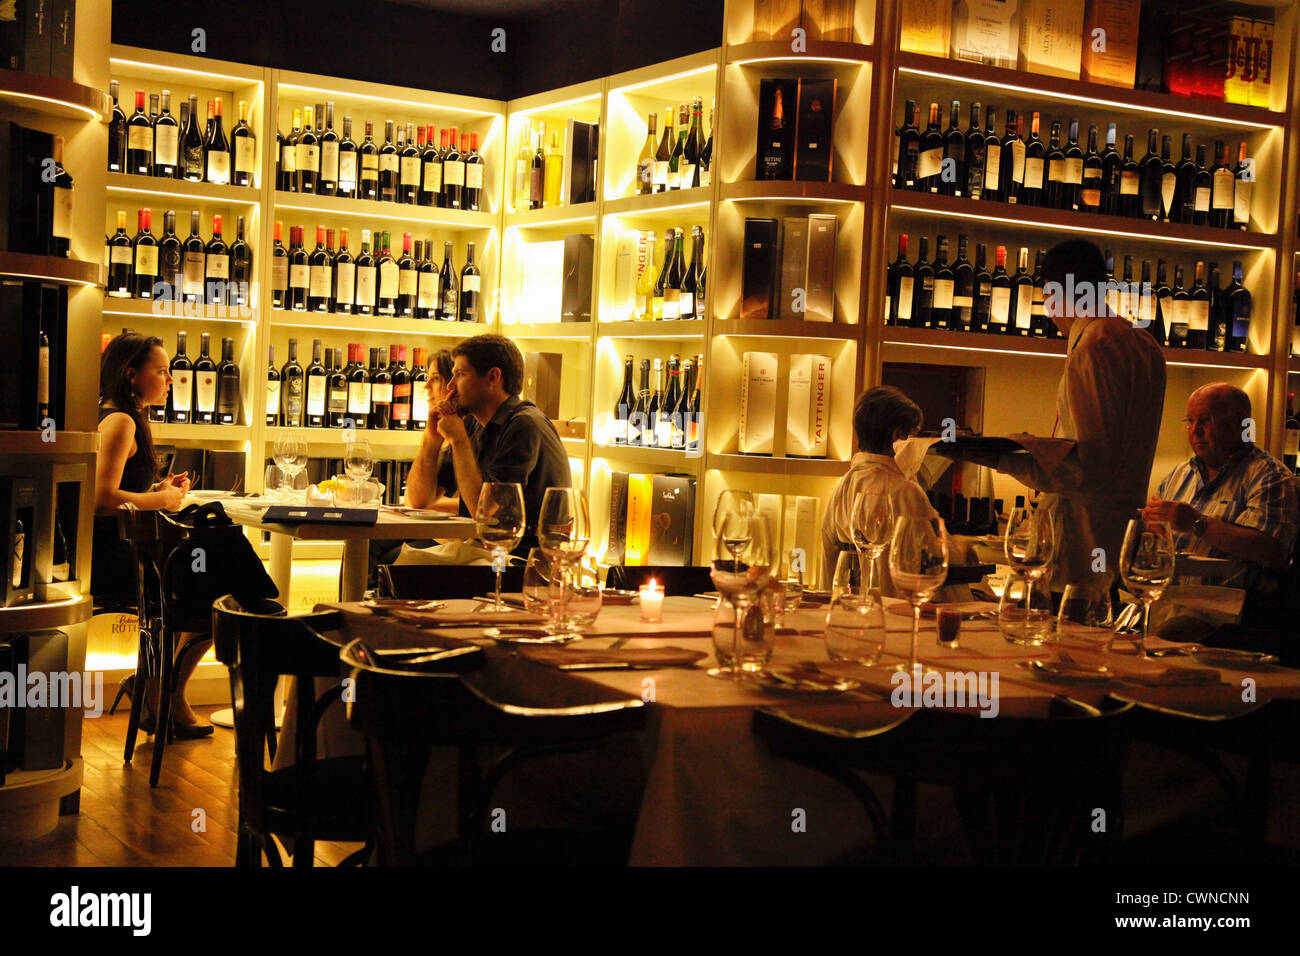 Aldo's Vinoteca bar and restaurant, San Telmo, Buenos Aires, Argentina. Stock Photo